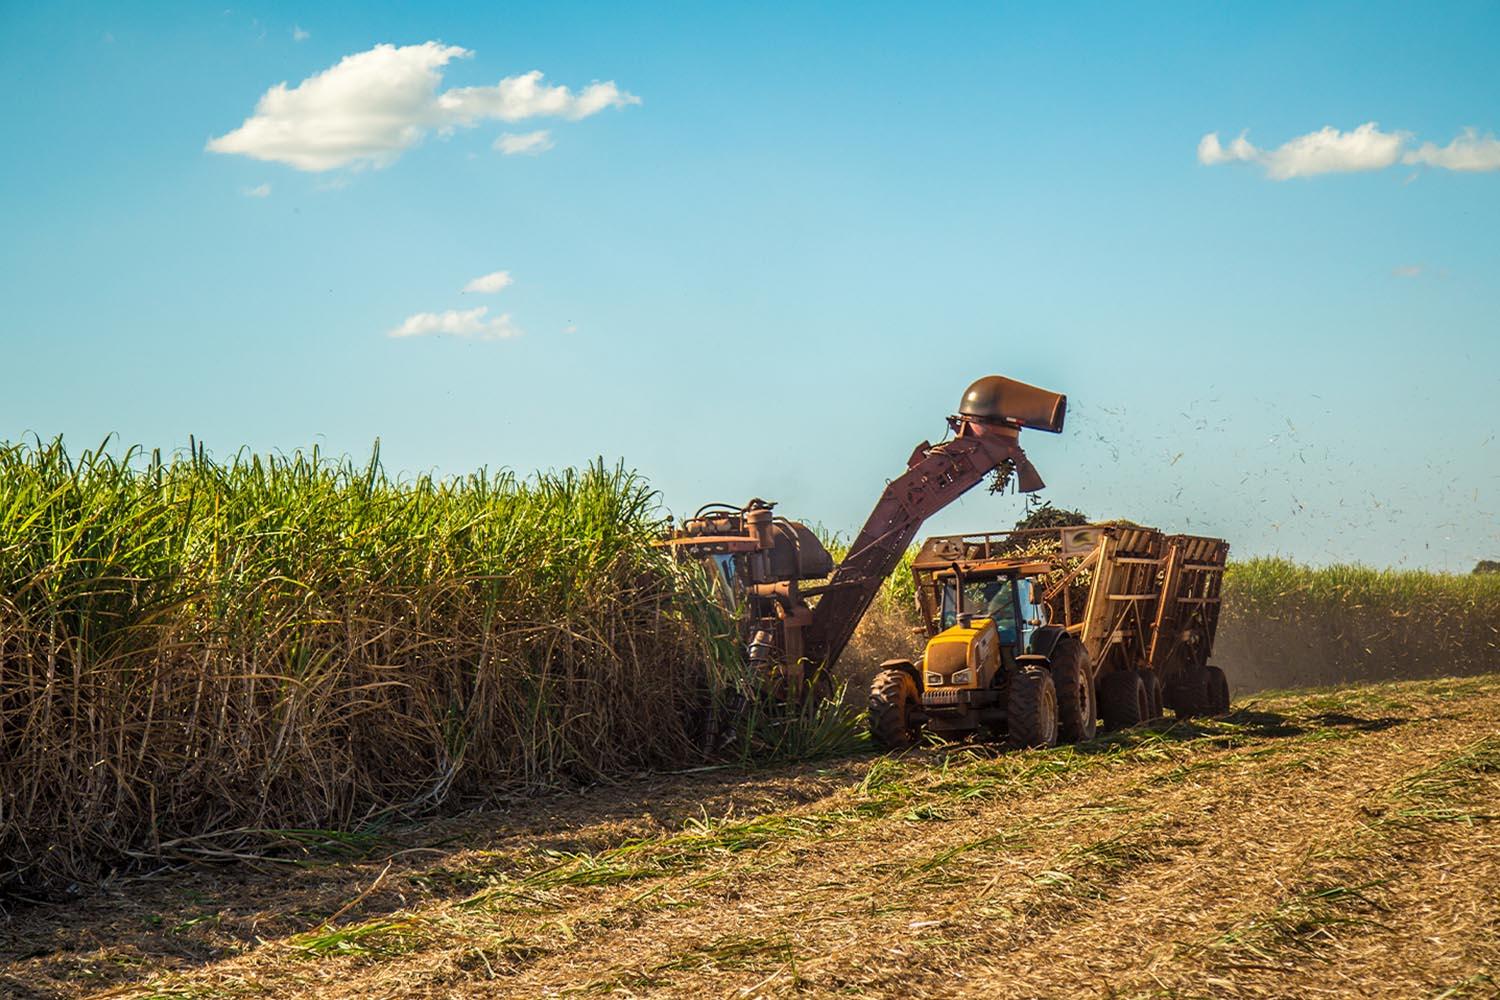 ktb-scb-loan-cutting-fresh-sugarcane-pm-dust-sugar-cane-industry-SPACEBAR-Hero.jpg